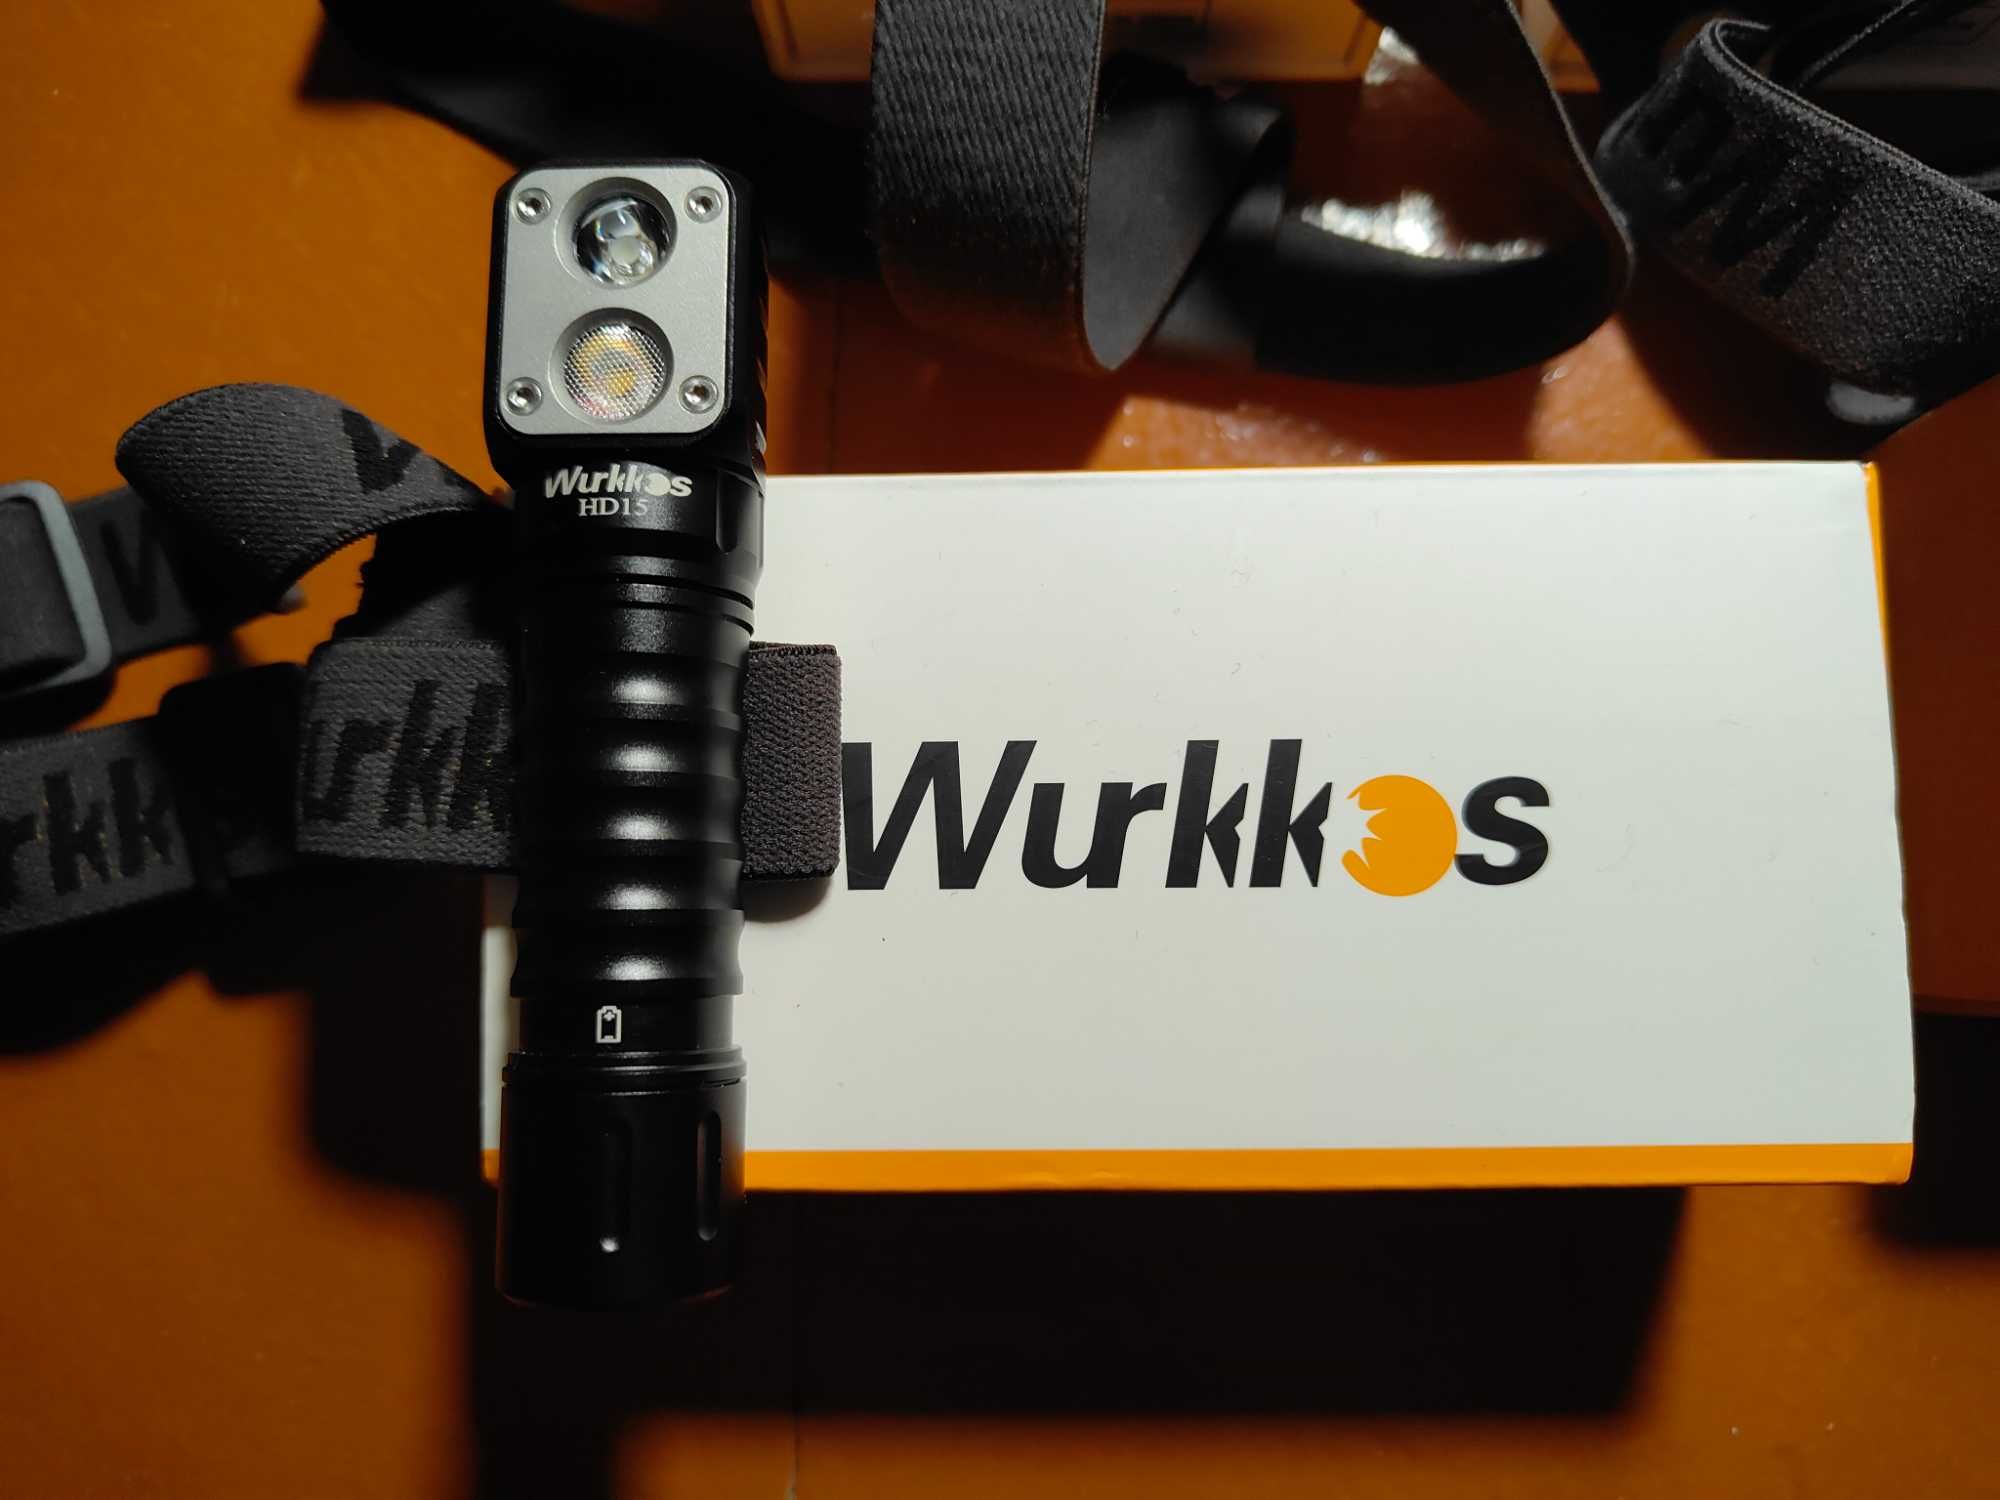 Wurkkos HD50 HD20 HD15 Sofirn HS40 HS20 SC18 Boruit D10 Natfire HS50!